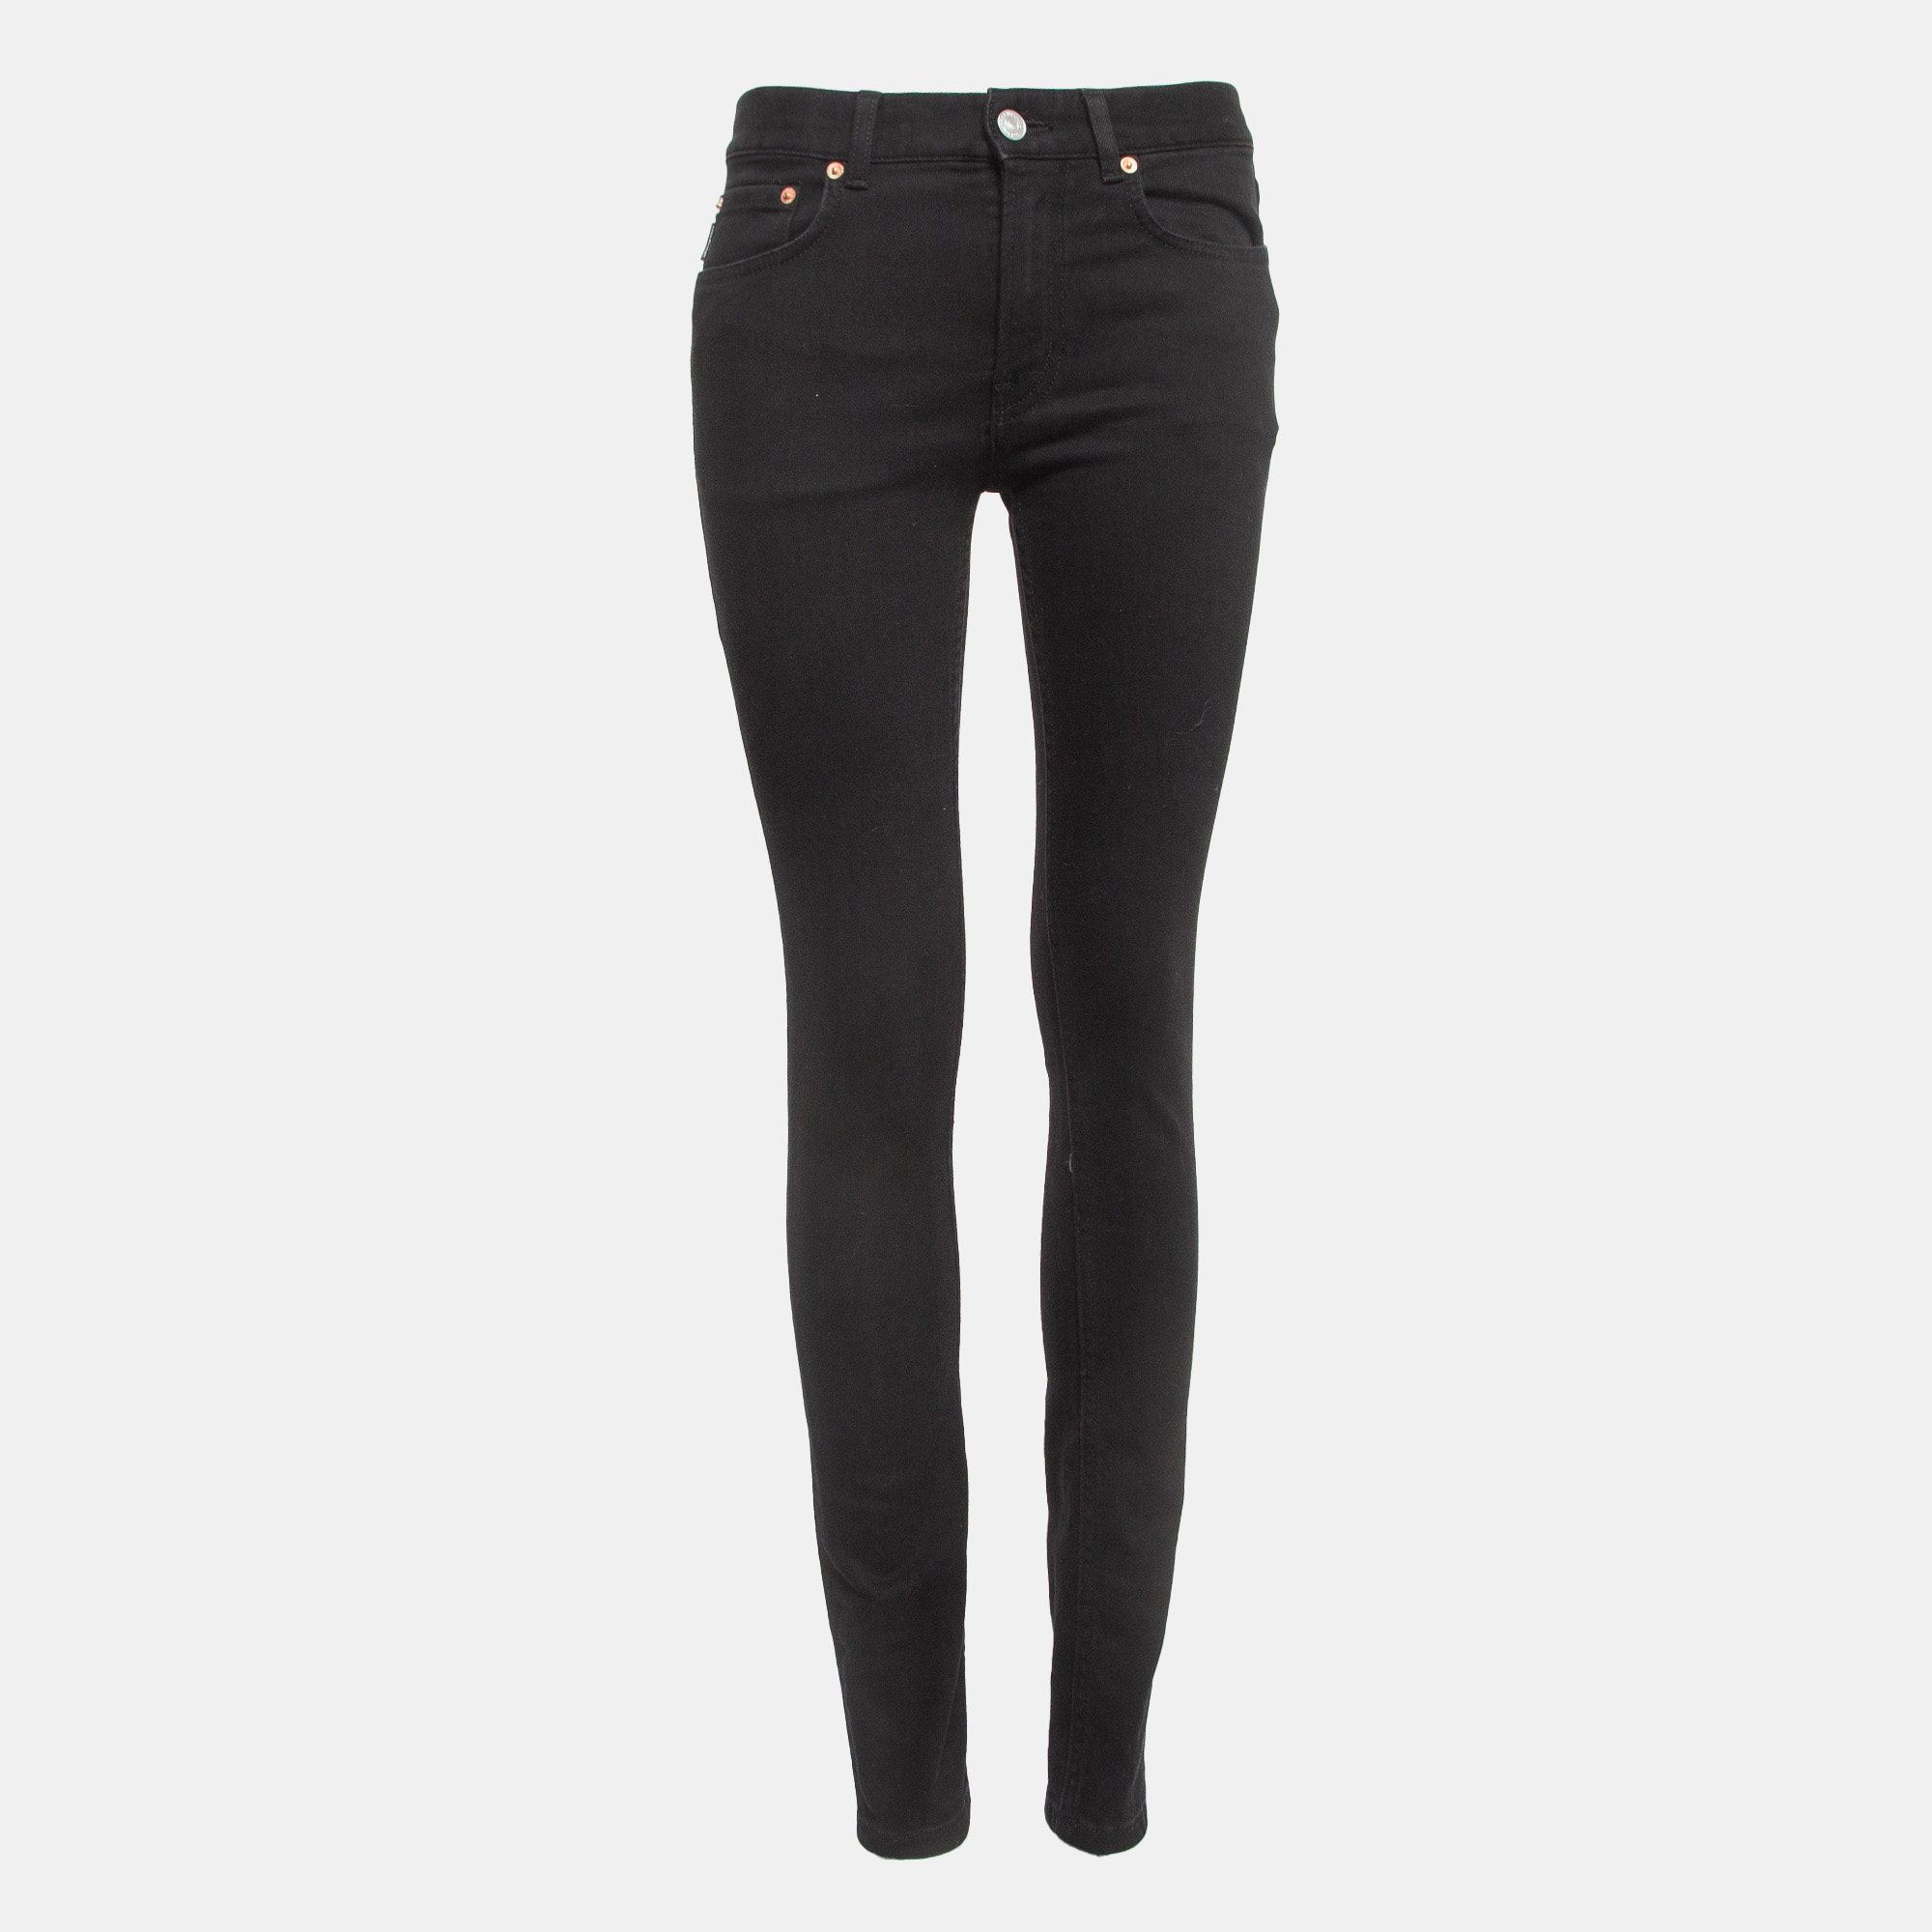 Balenciaga black denim skinny jeans s waist 25"